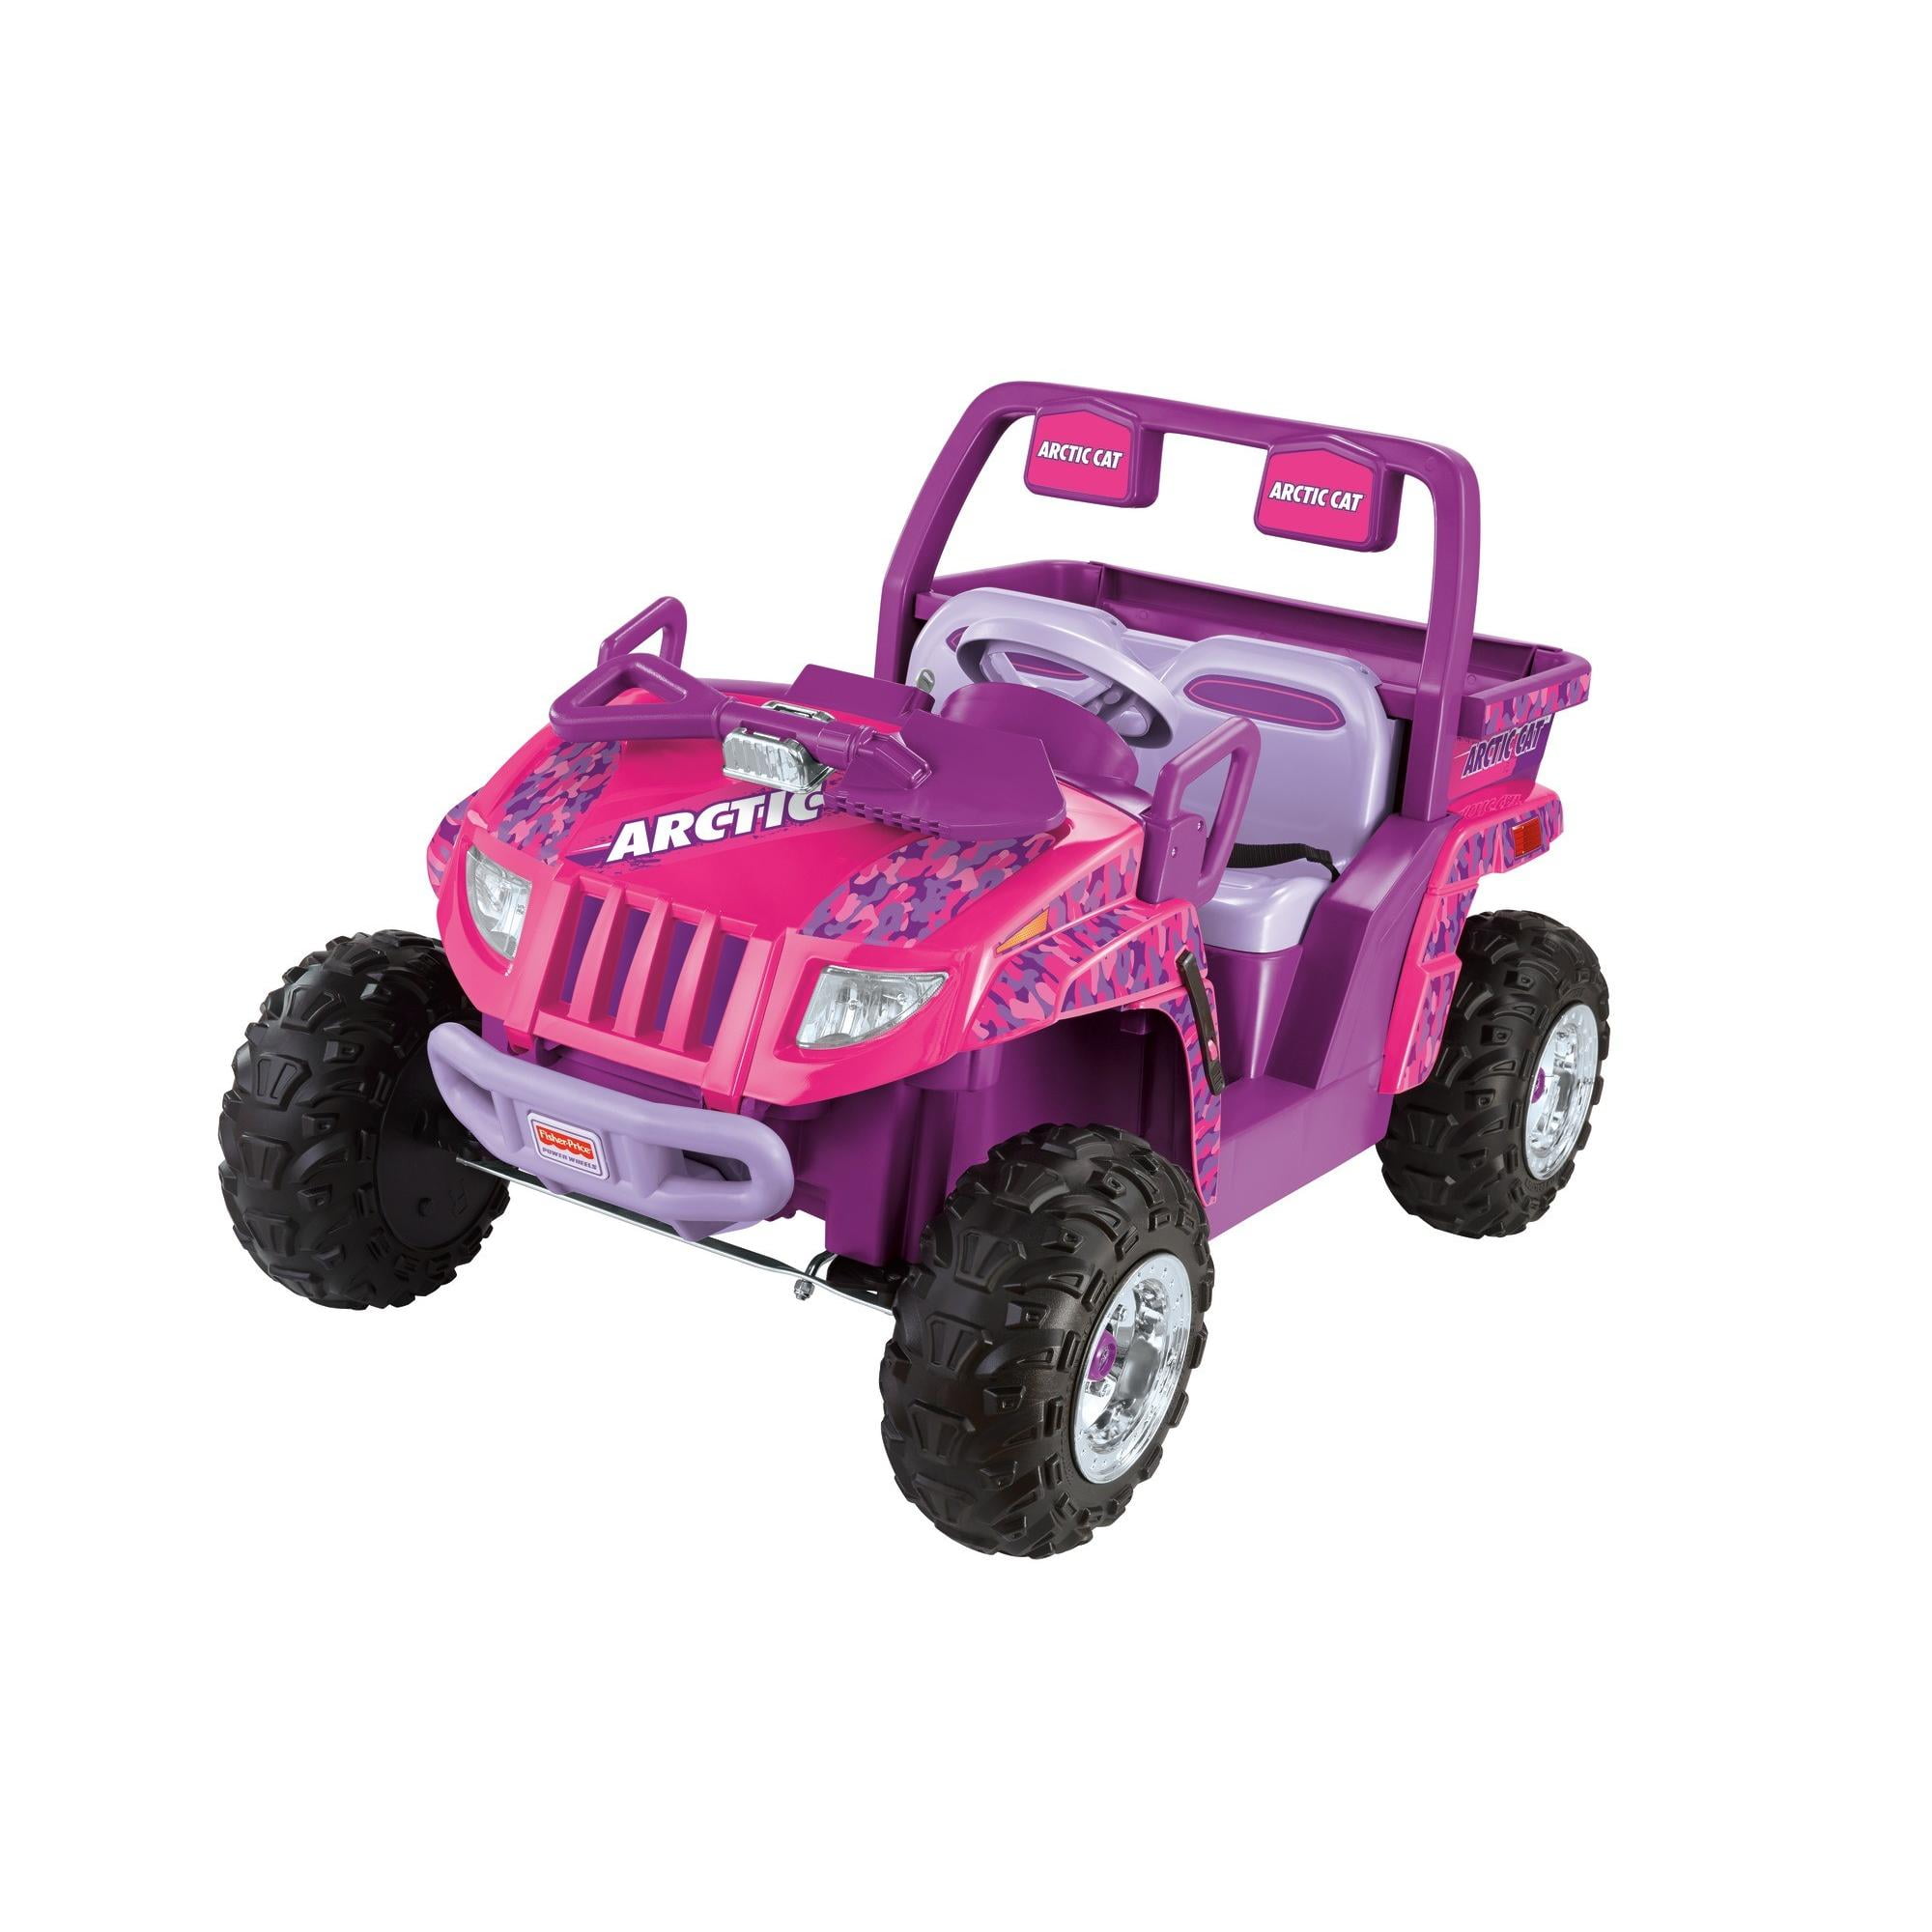 Power Wheels Toys Arctic Cat 1000 Pink 